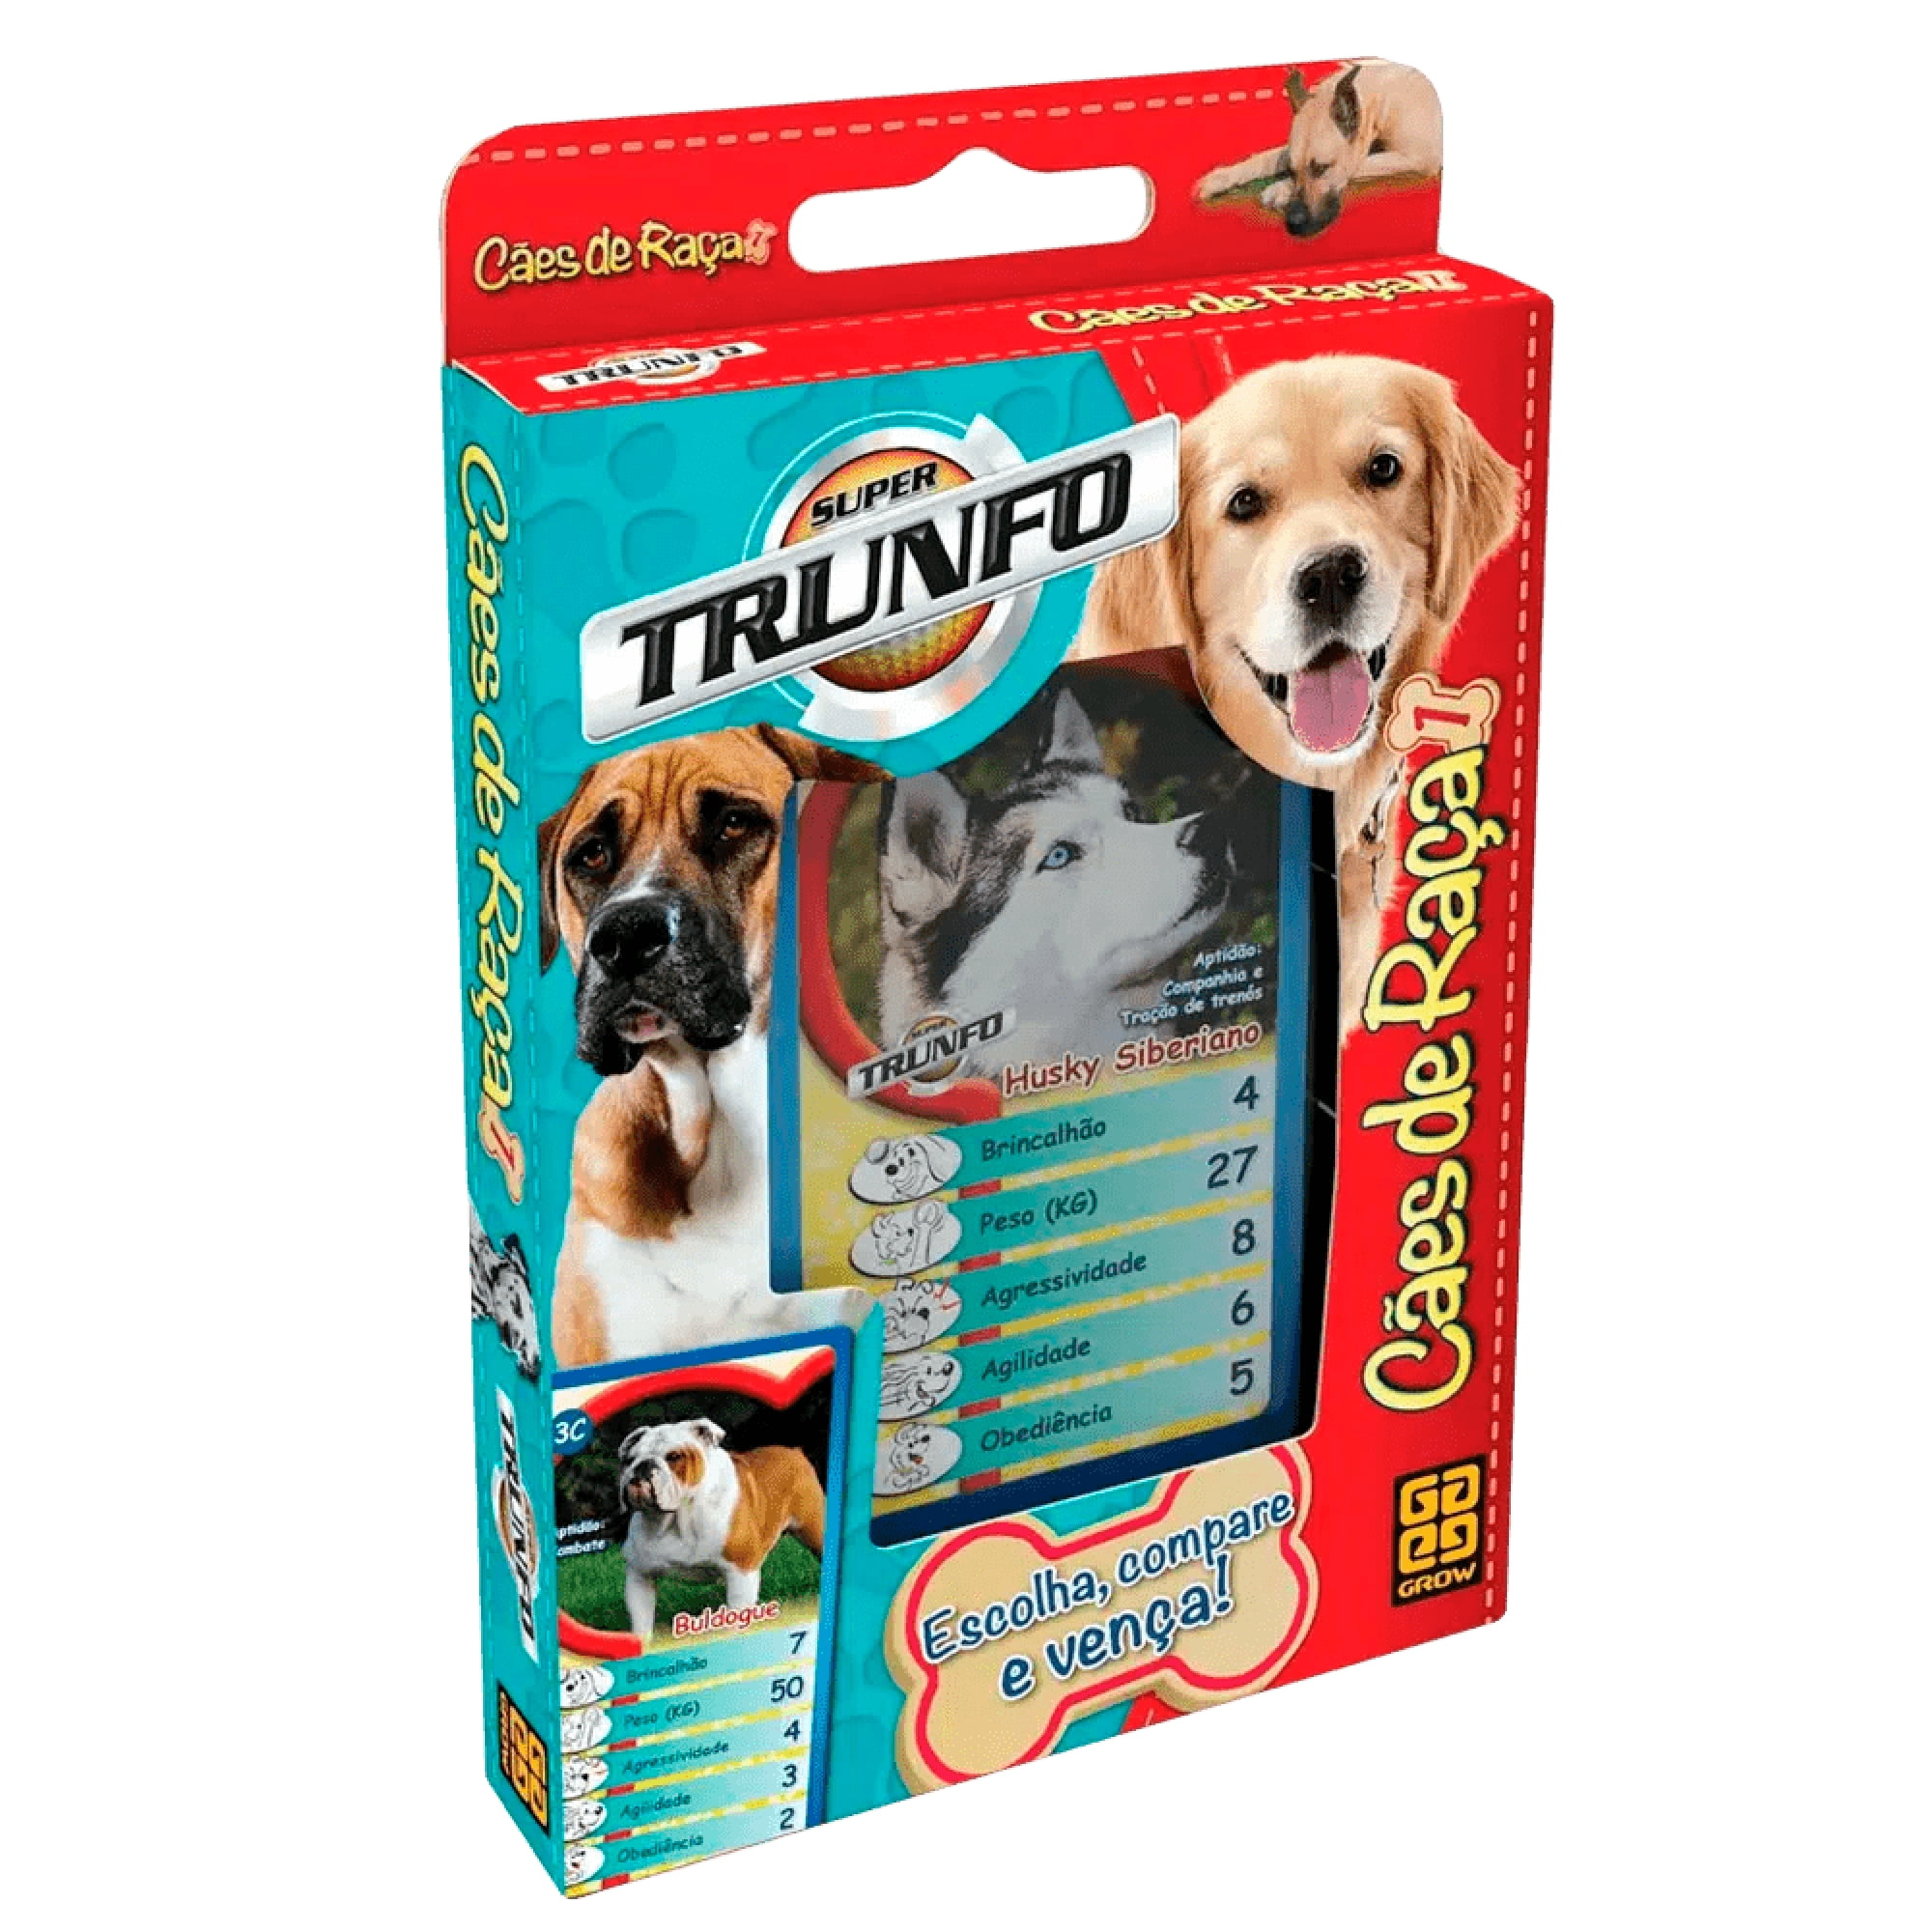 Super Trunfo Cães de Raça